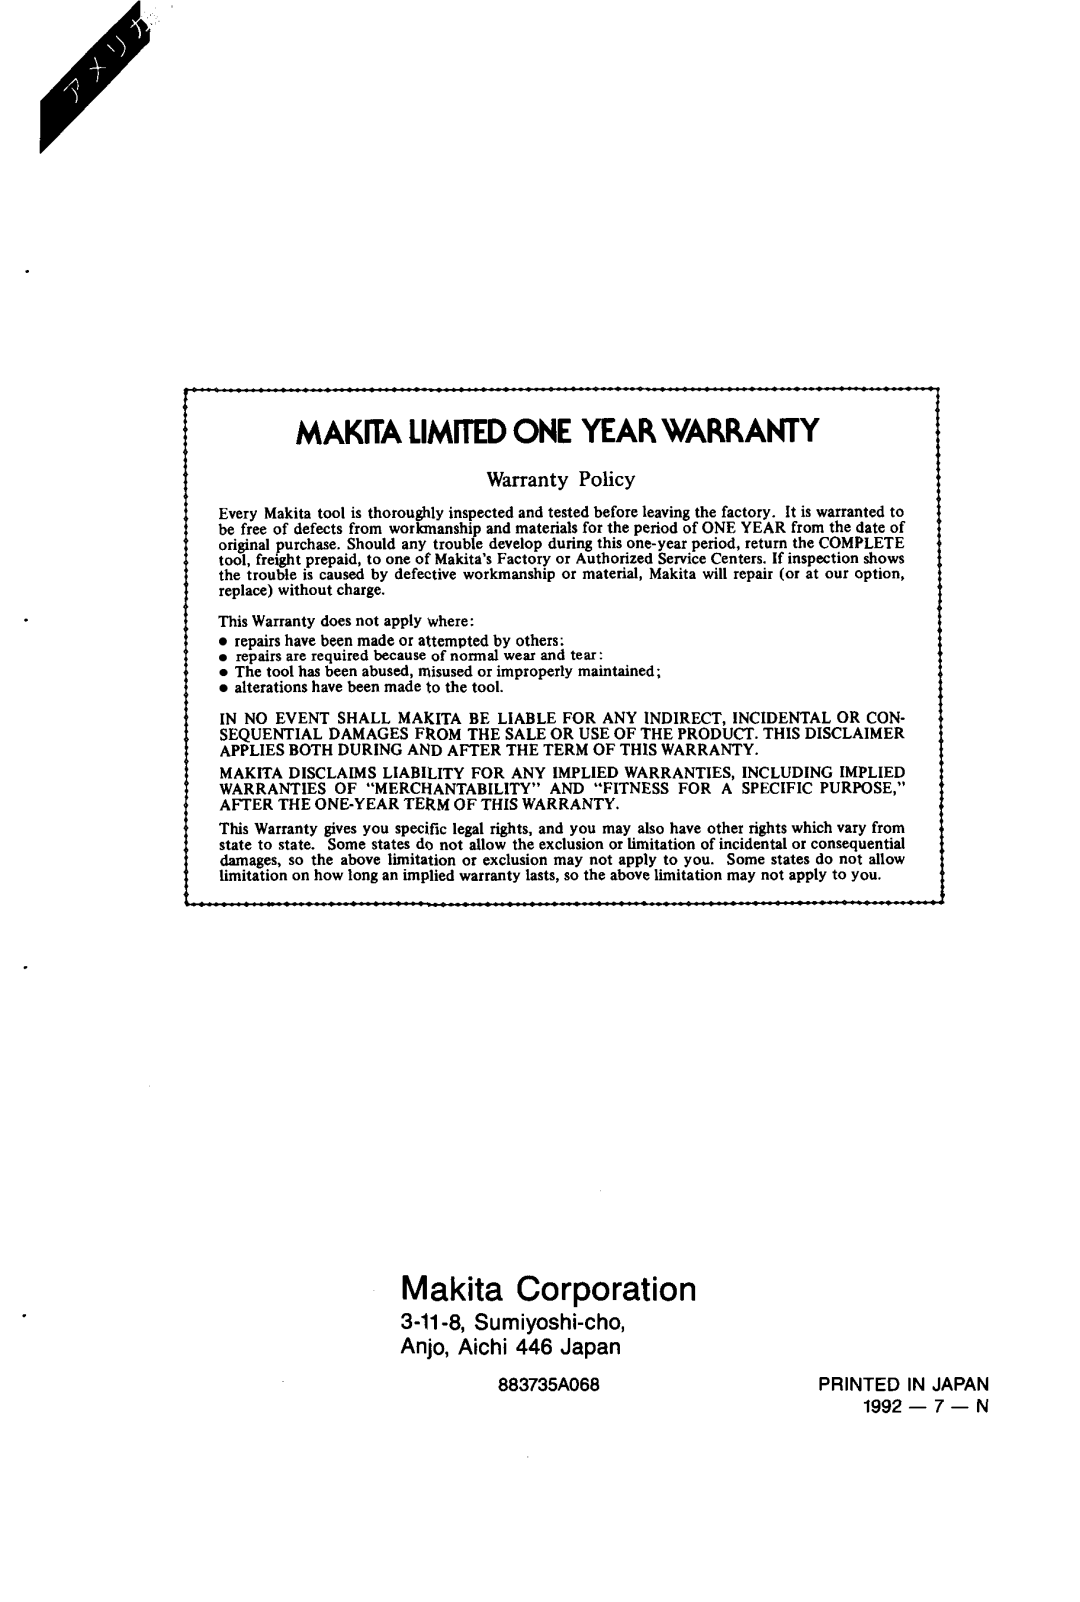 Makita 9200Y Makcta Limedone Year Warranty, Makita Corporation, APFiiFsioTHDURING-AND AFTER~~~~~~~, Warranty Policy 